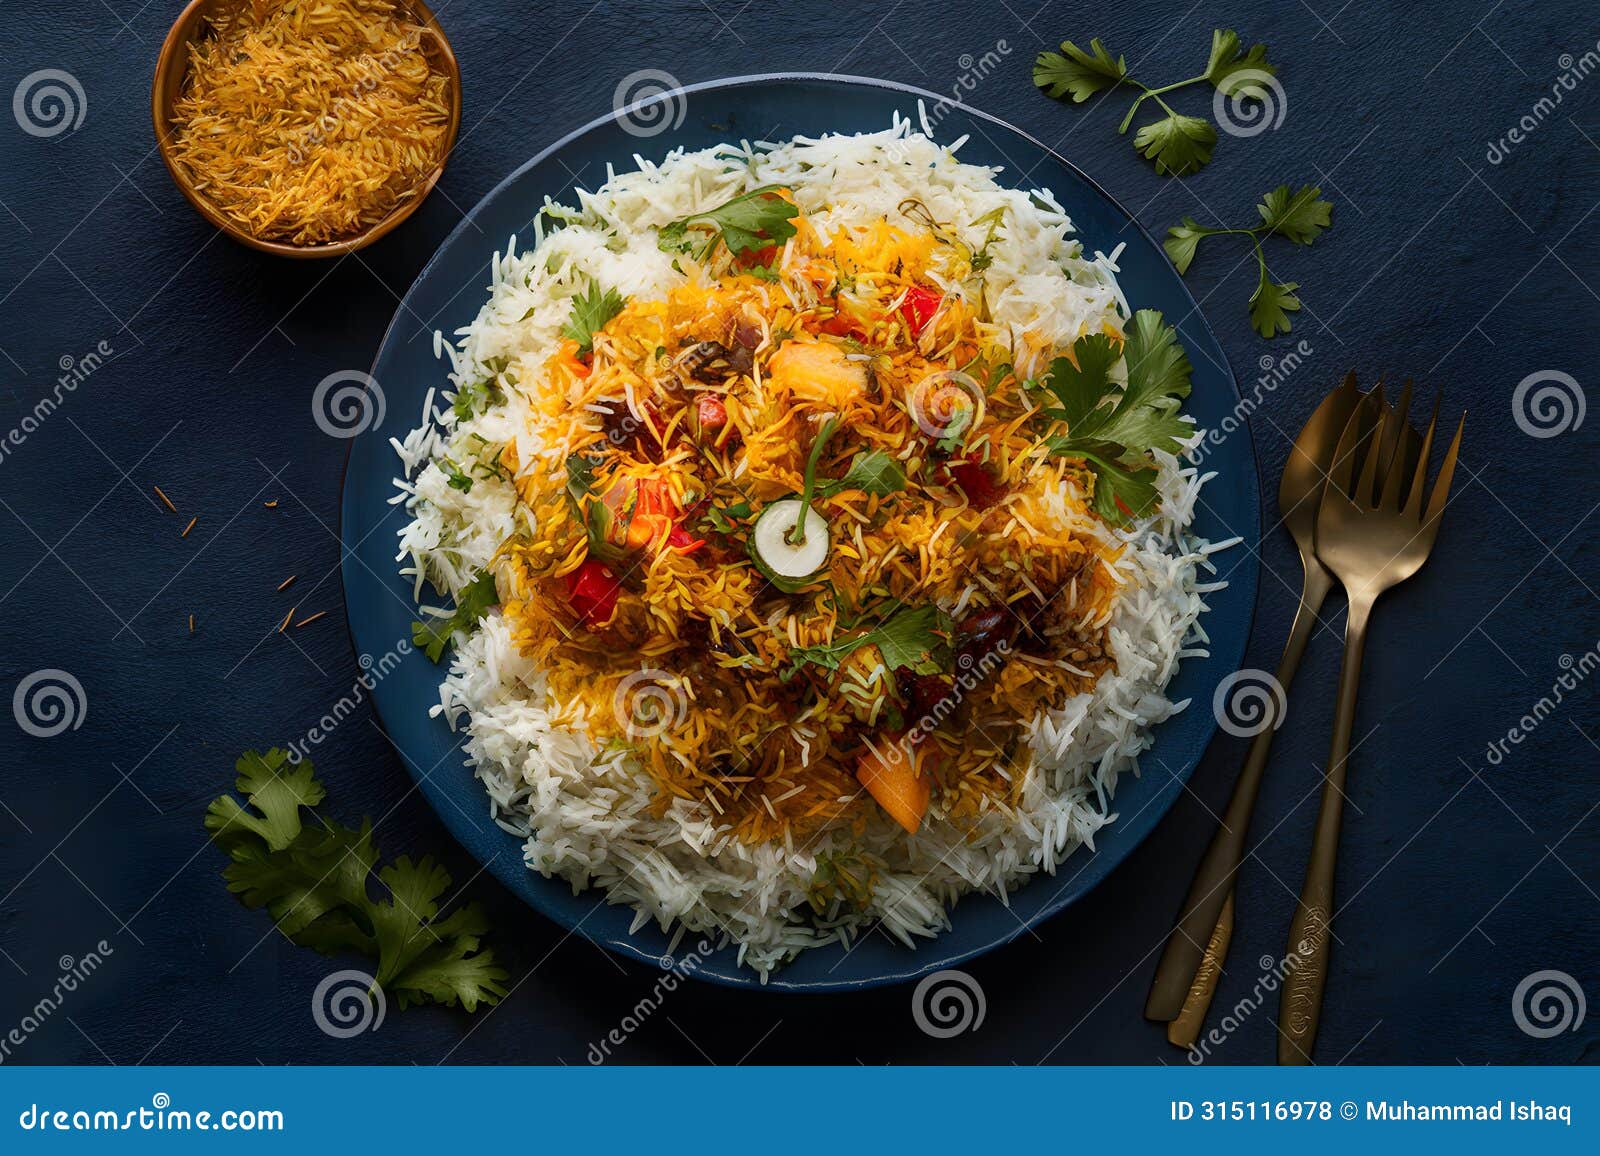 portrayal of indian biryani rice in foodgraphy photography